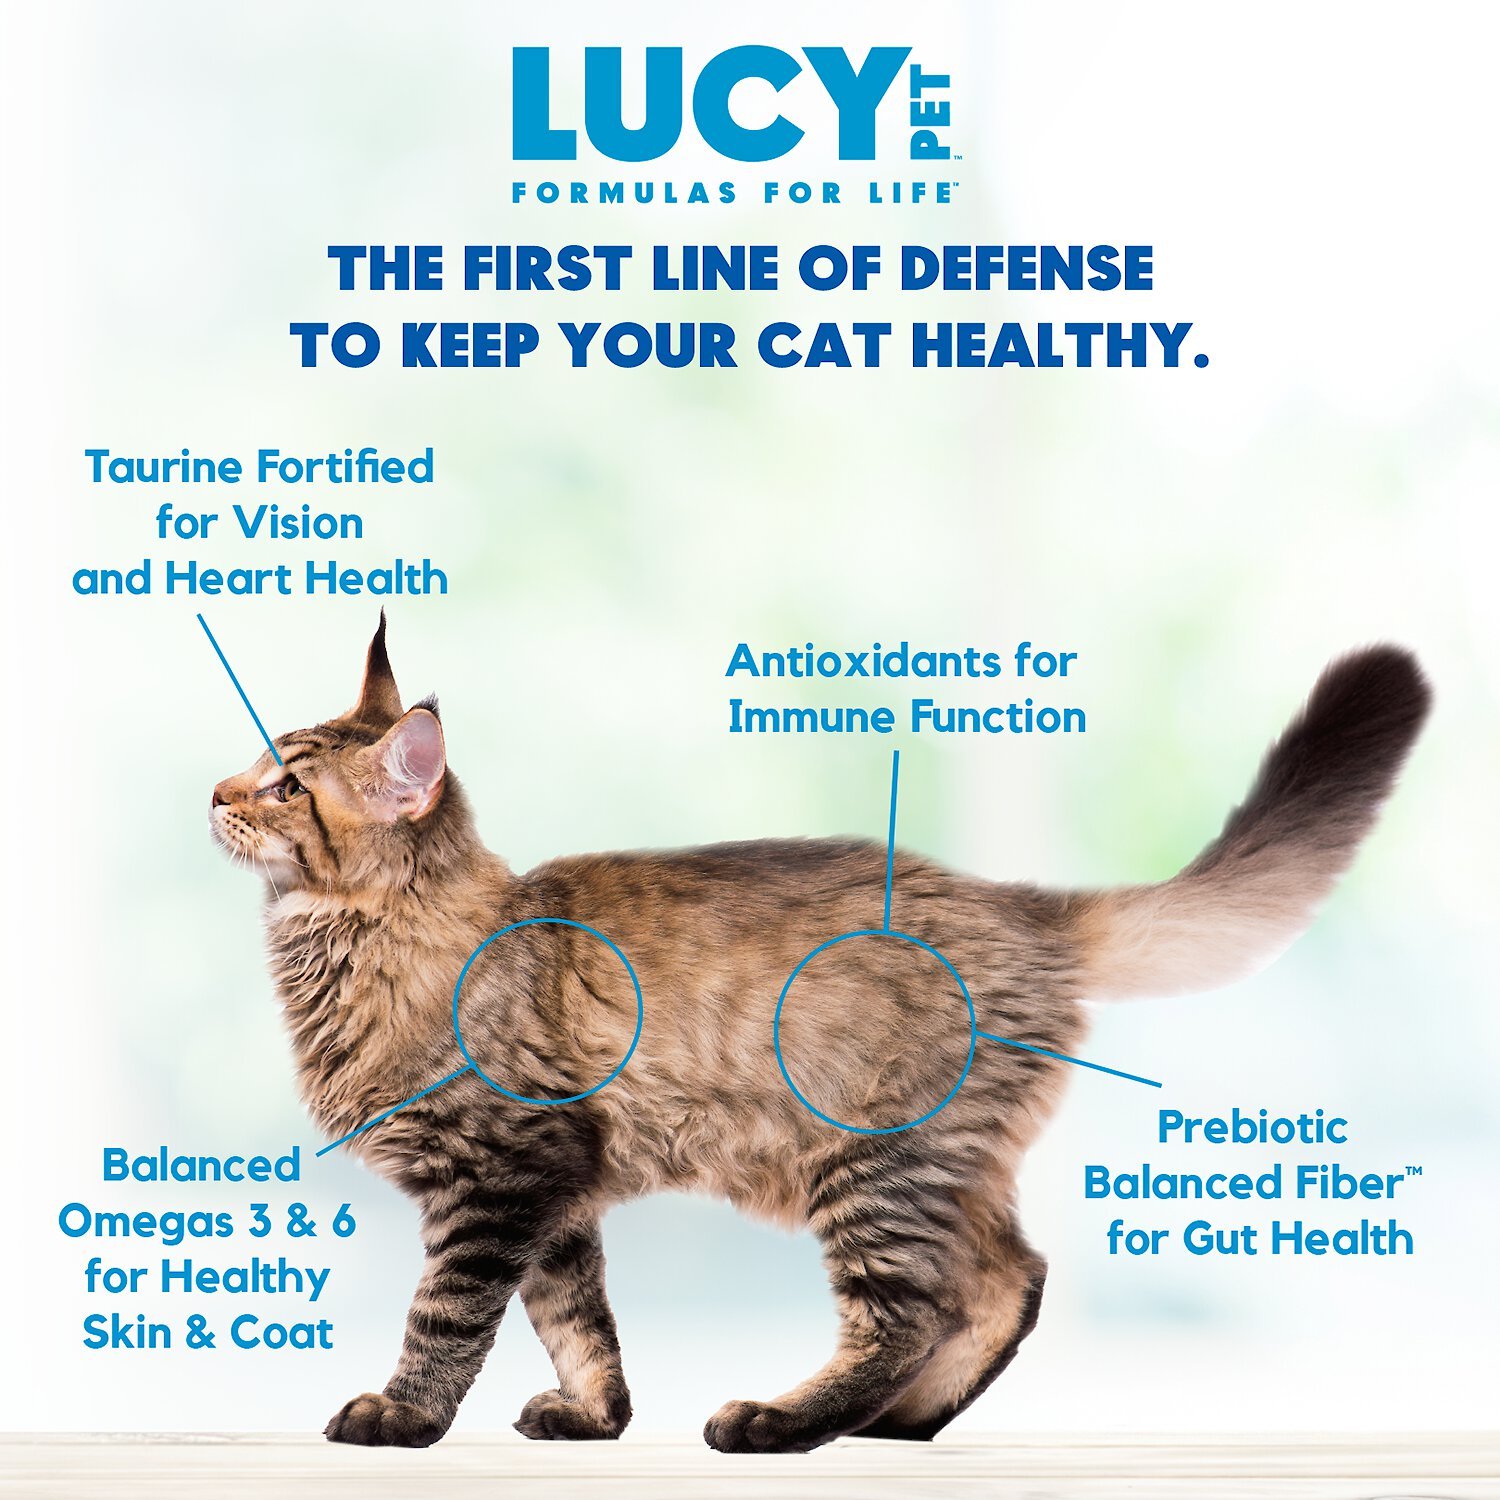 Lucy cat